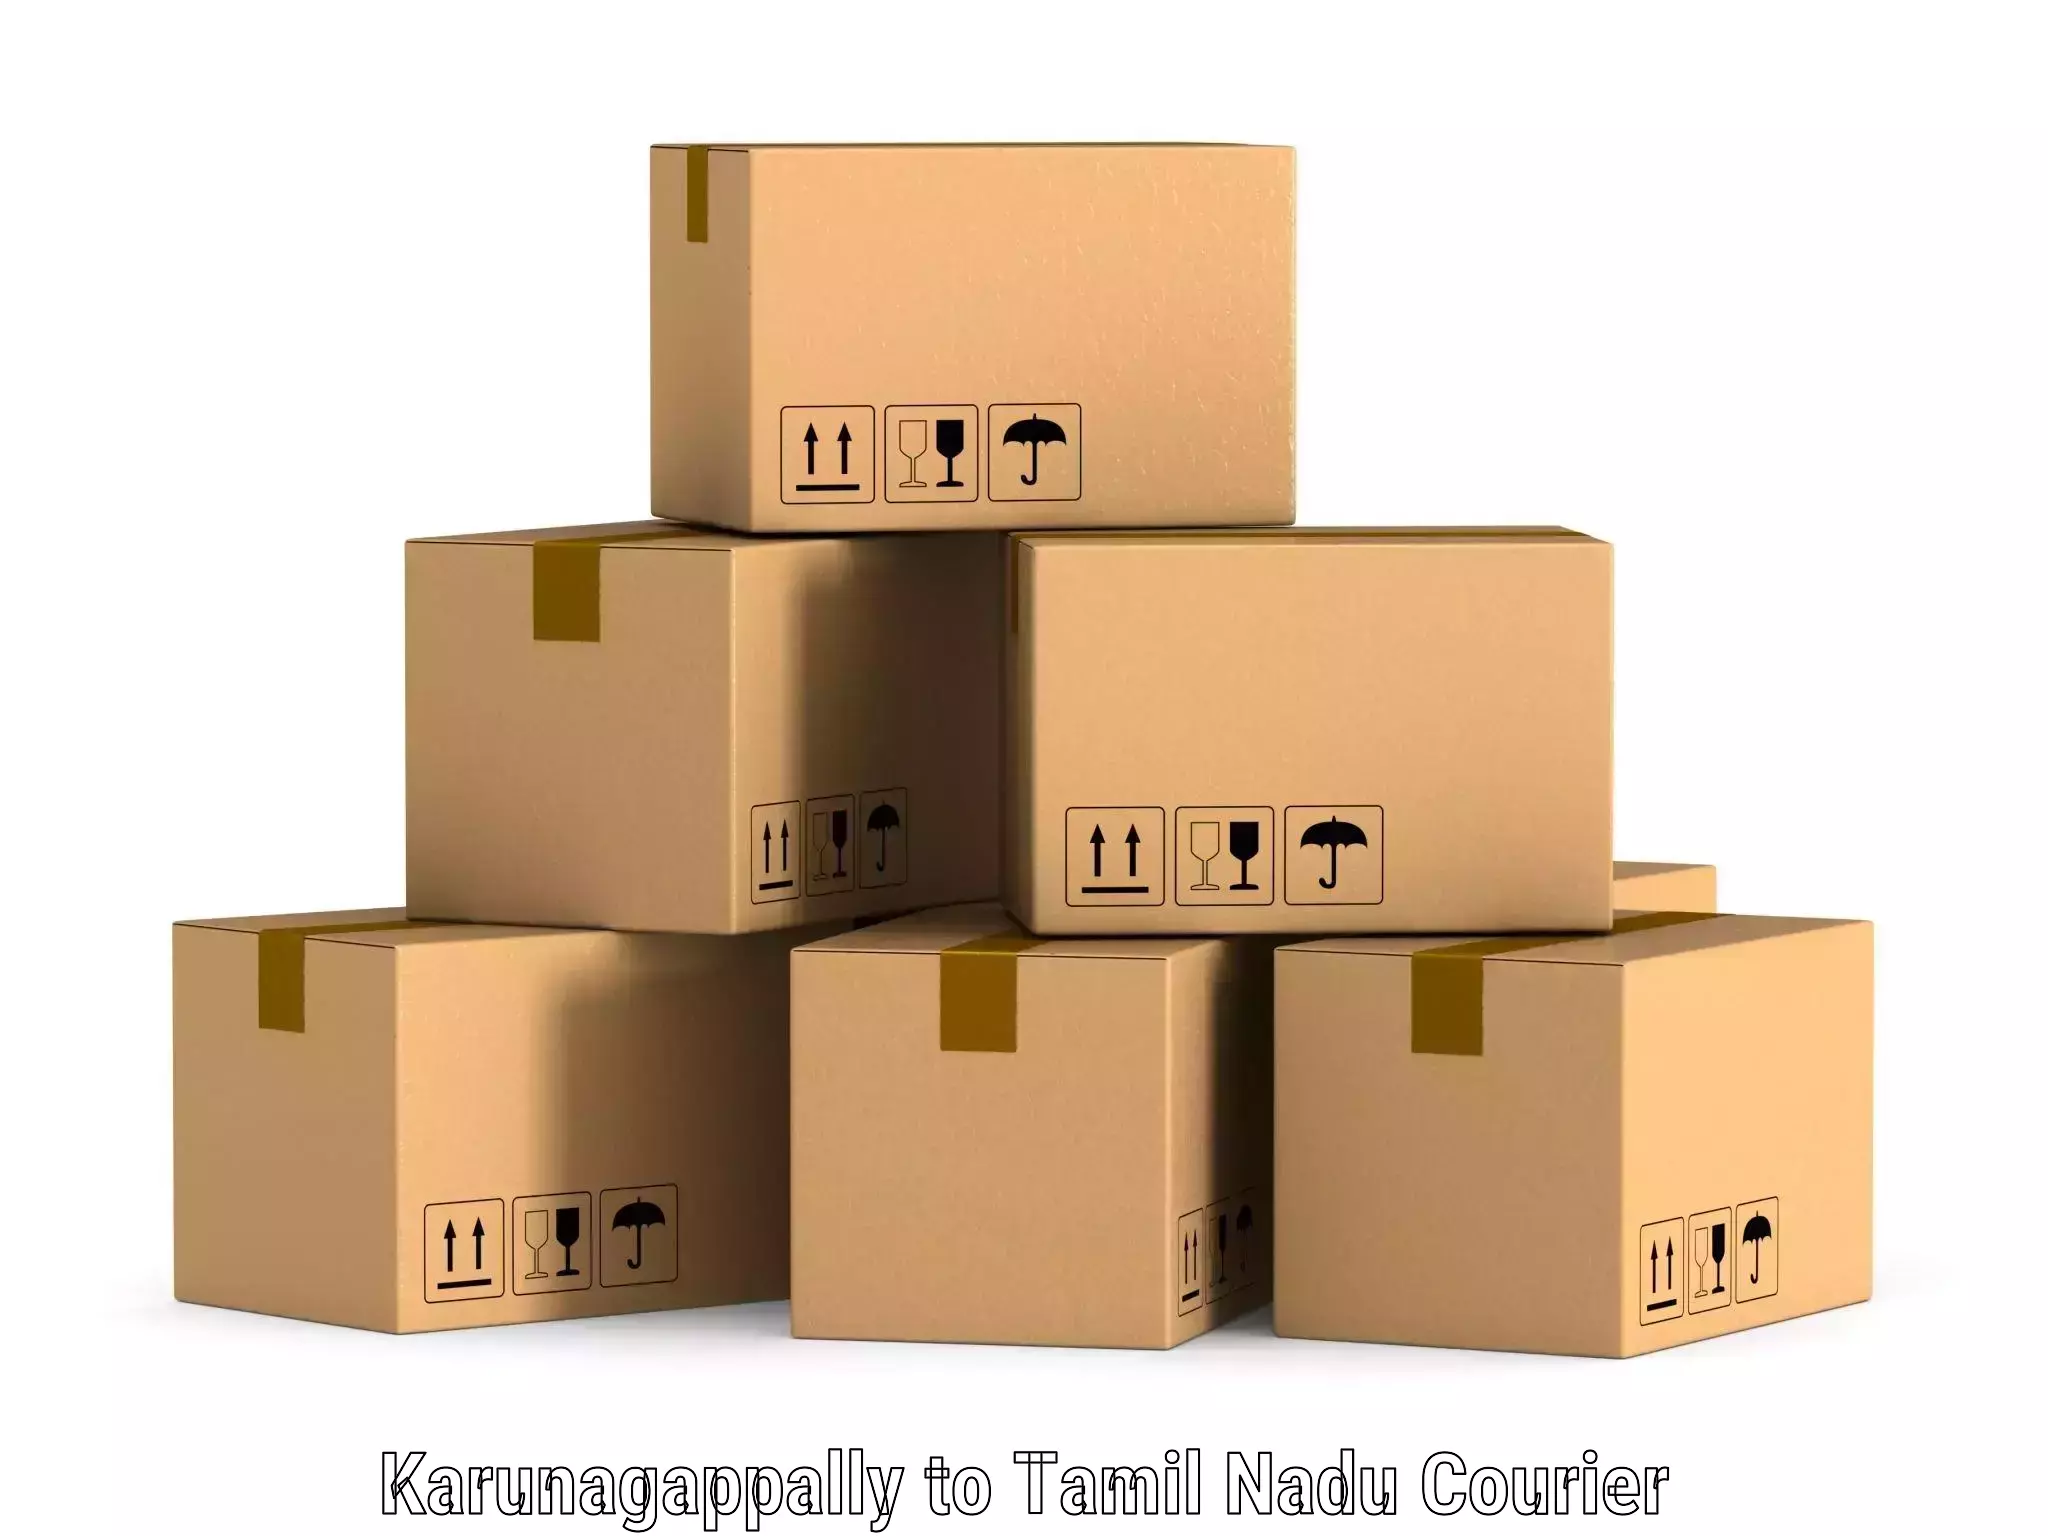 Package delivery network Karunagappally to Tamil Nadu